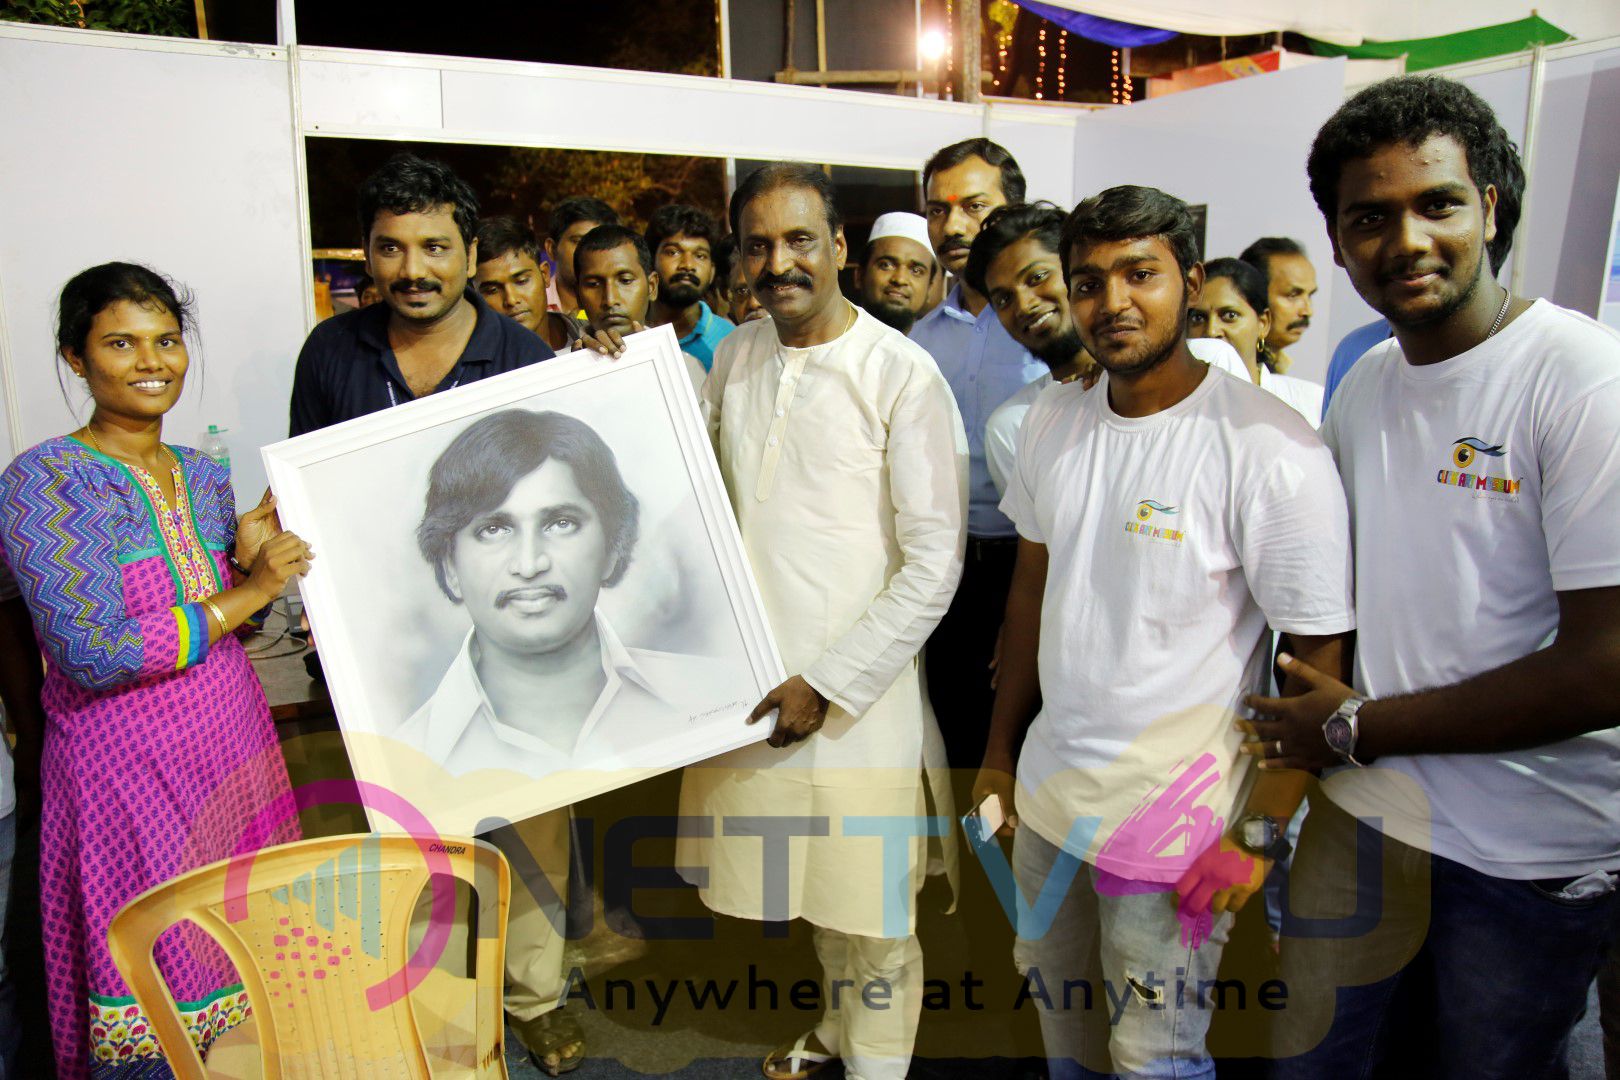  Celebrities At Chennai Book Fair 2016 Charming Photos Tamil Gallery